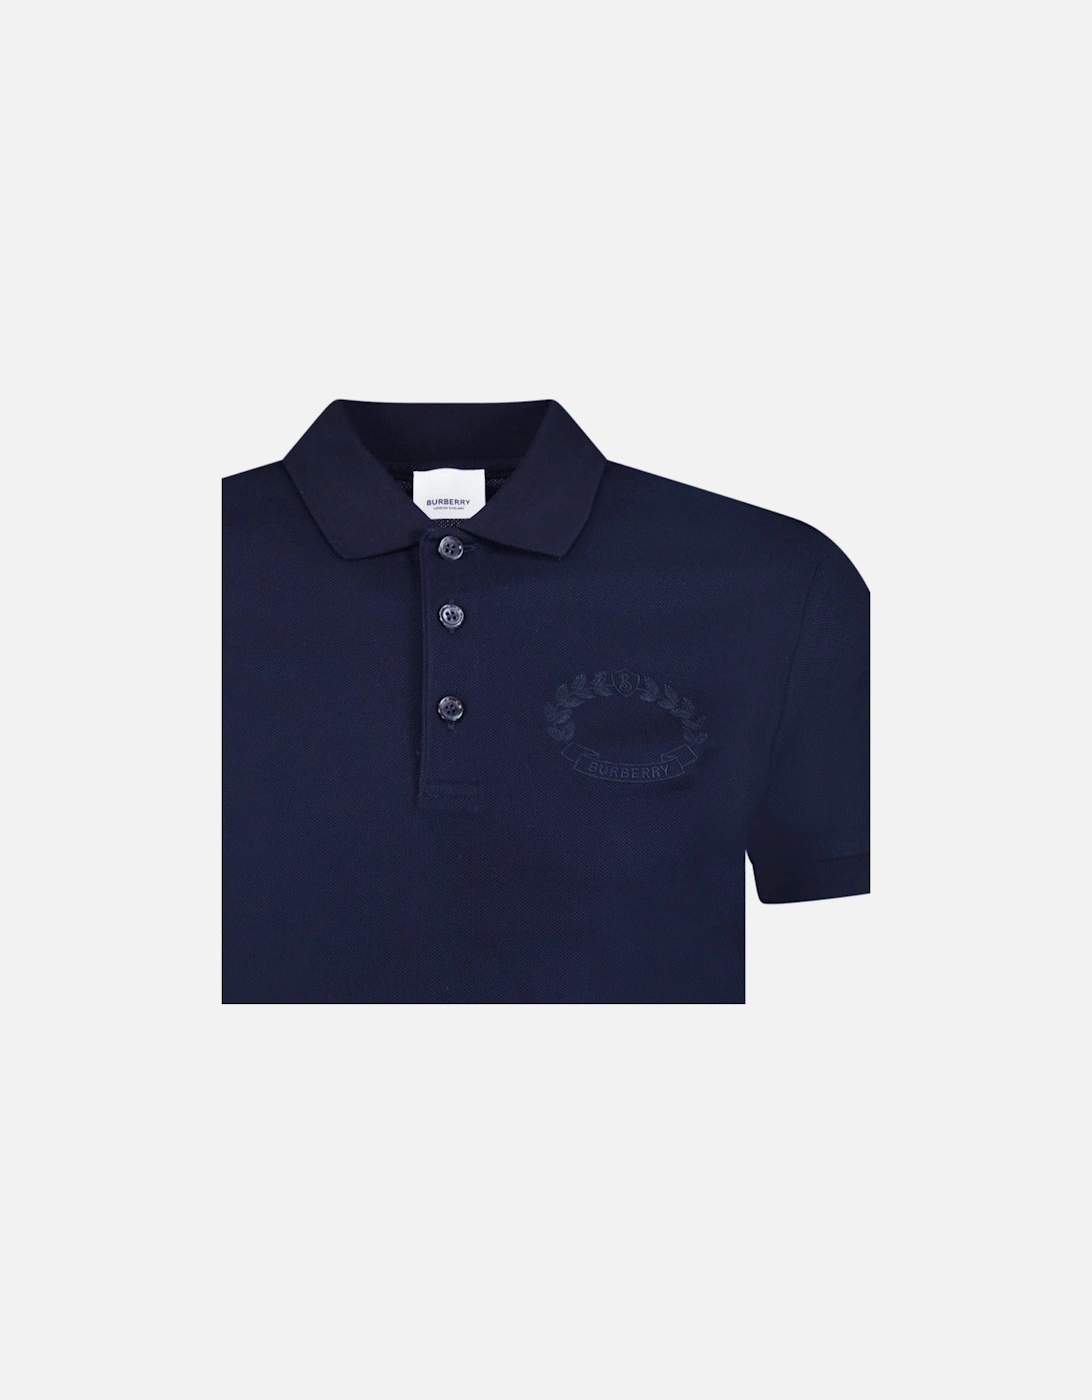 'Walworth' Crest Polo-Shirt Navy